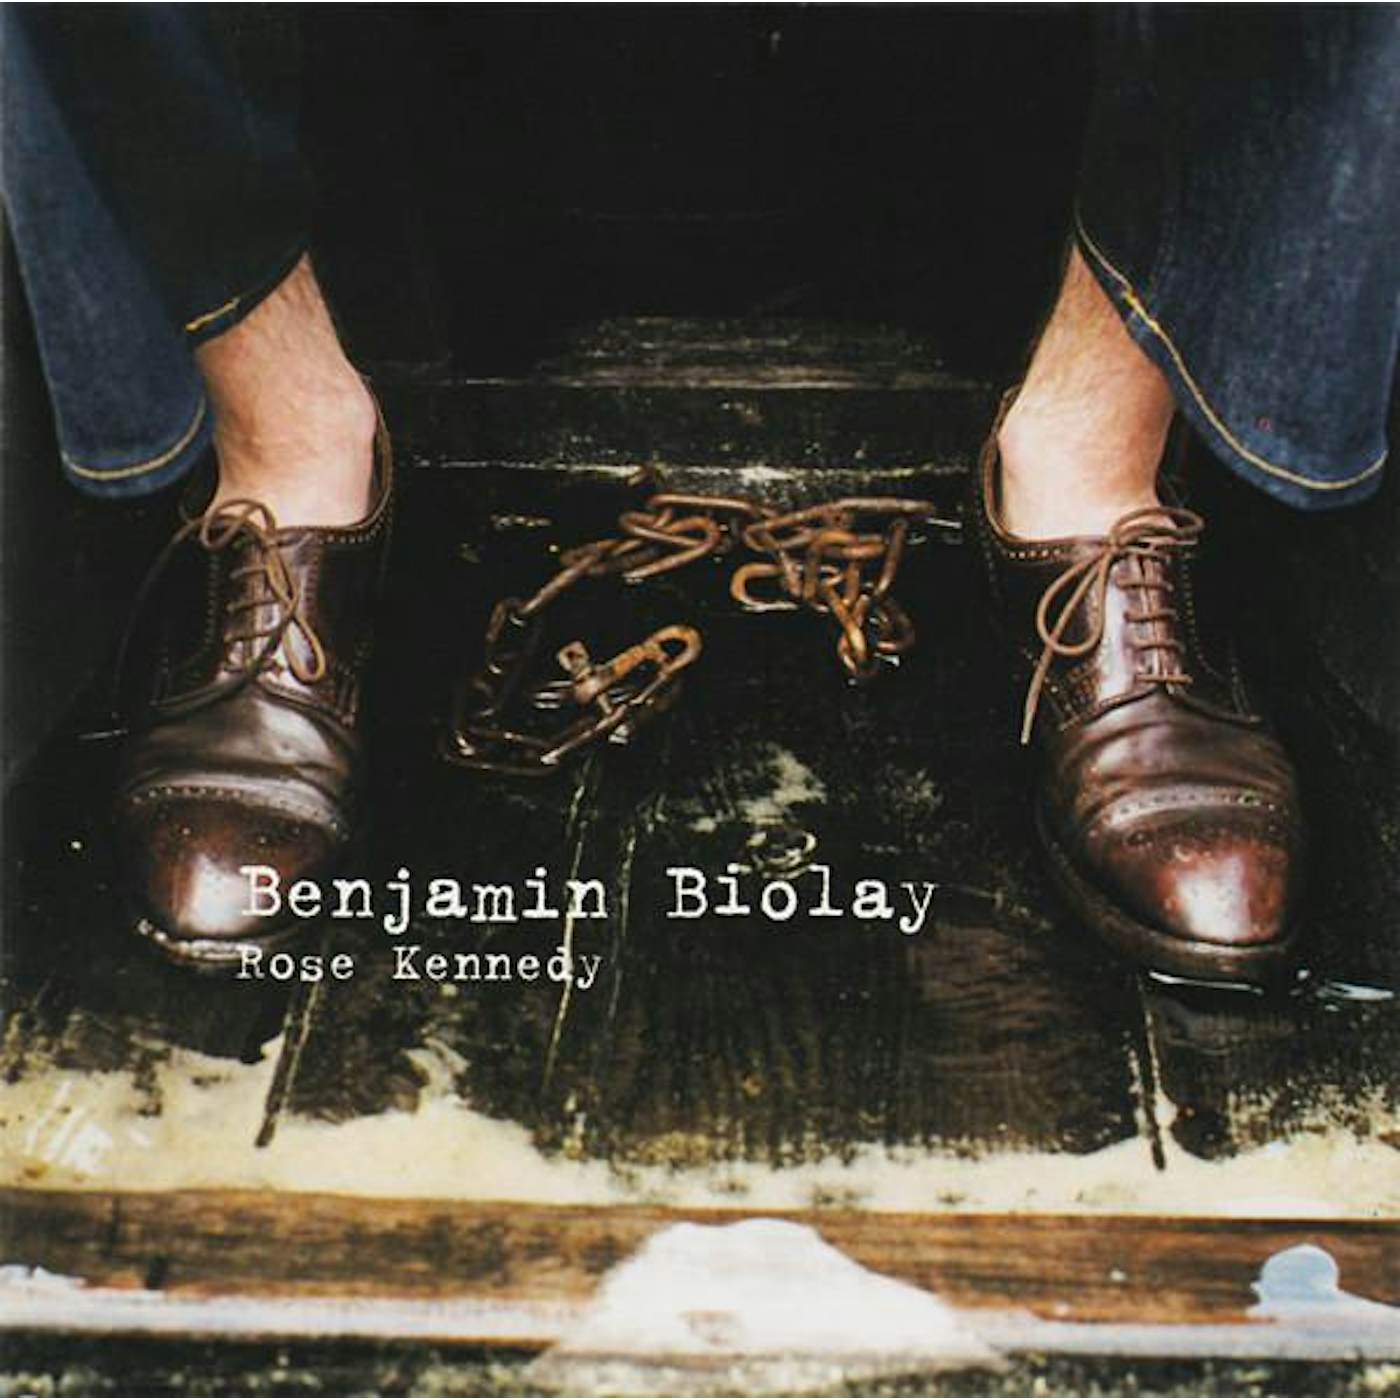 Benjamin Biolay rose kennedy Vinyl Record